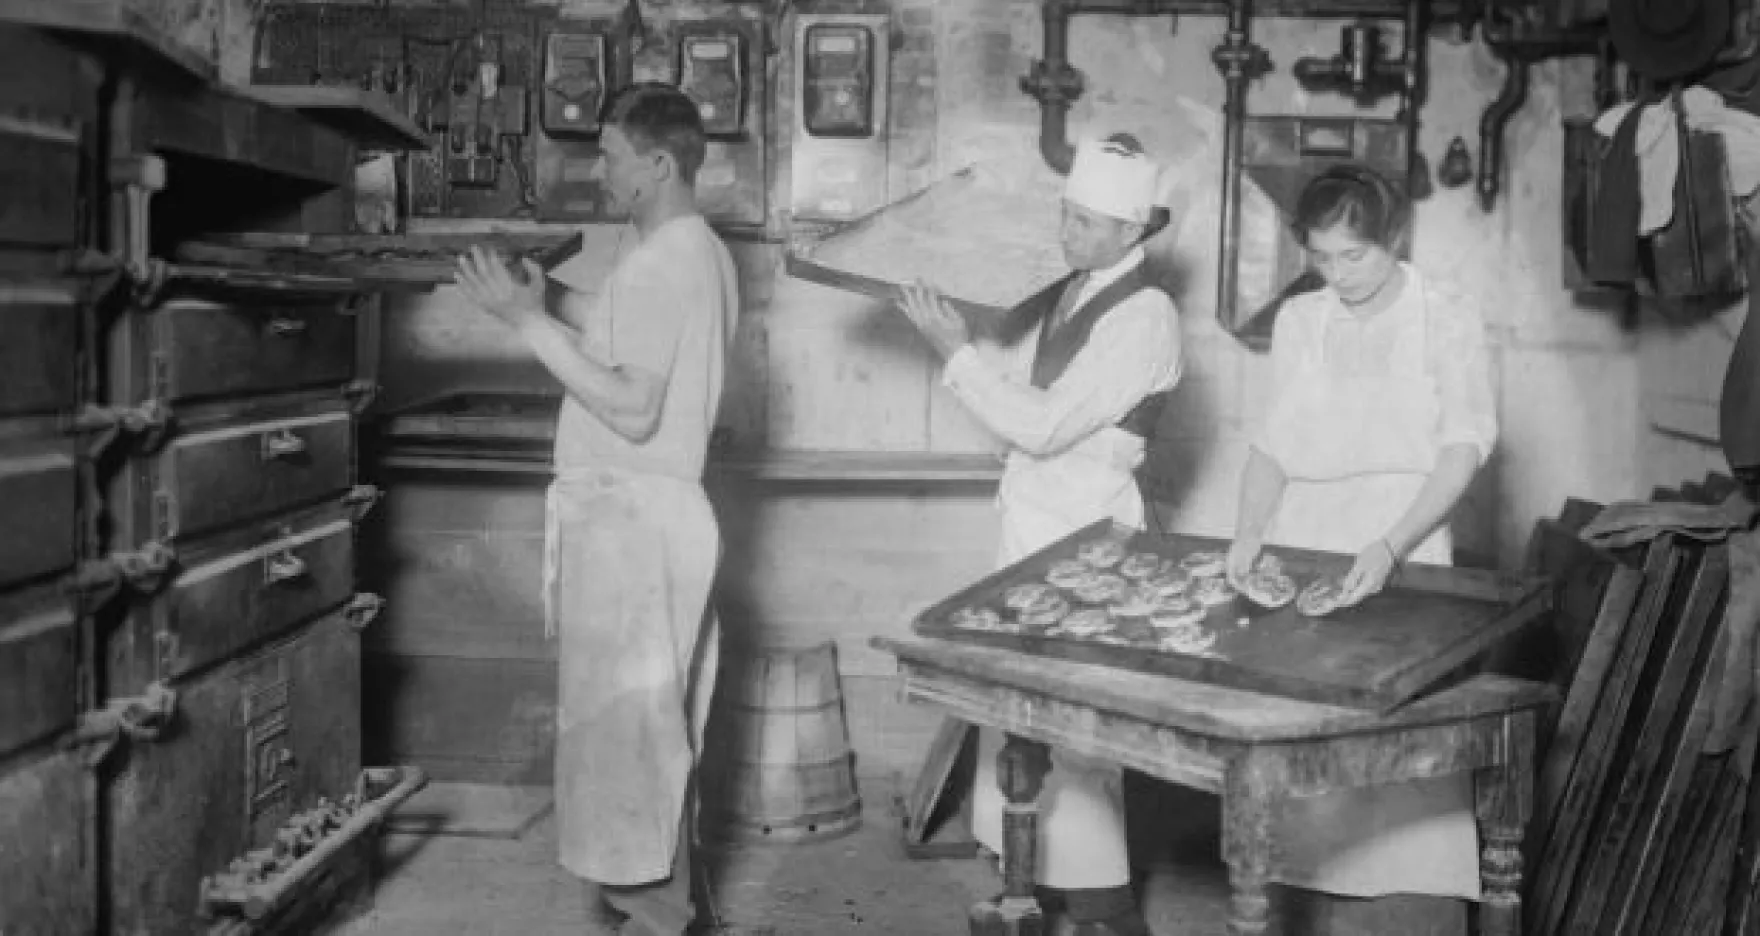 New York Bakers working in tenement